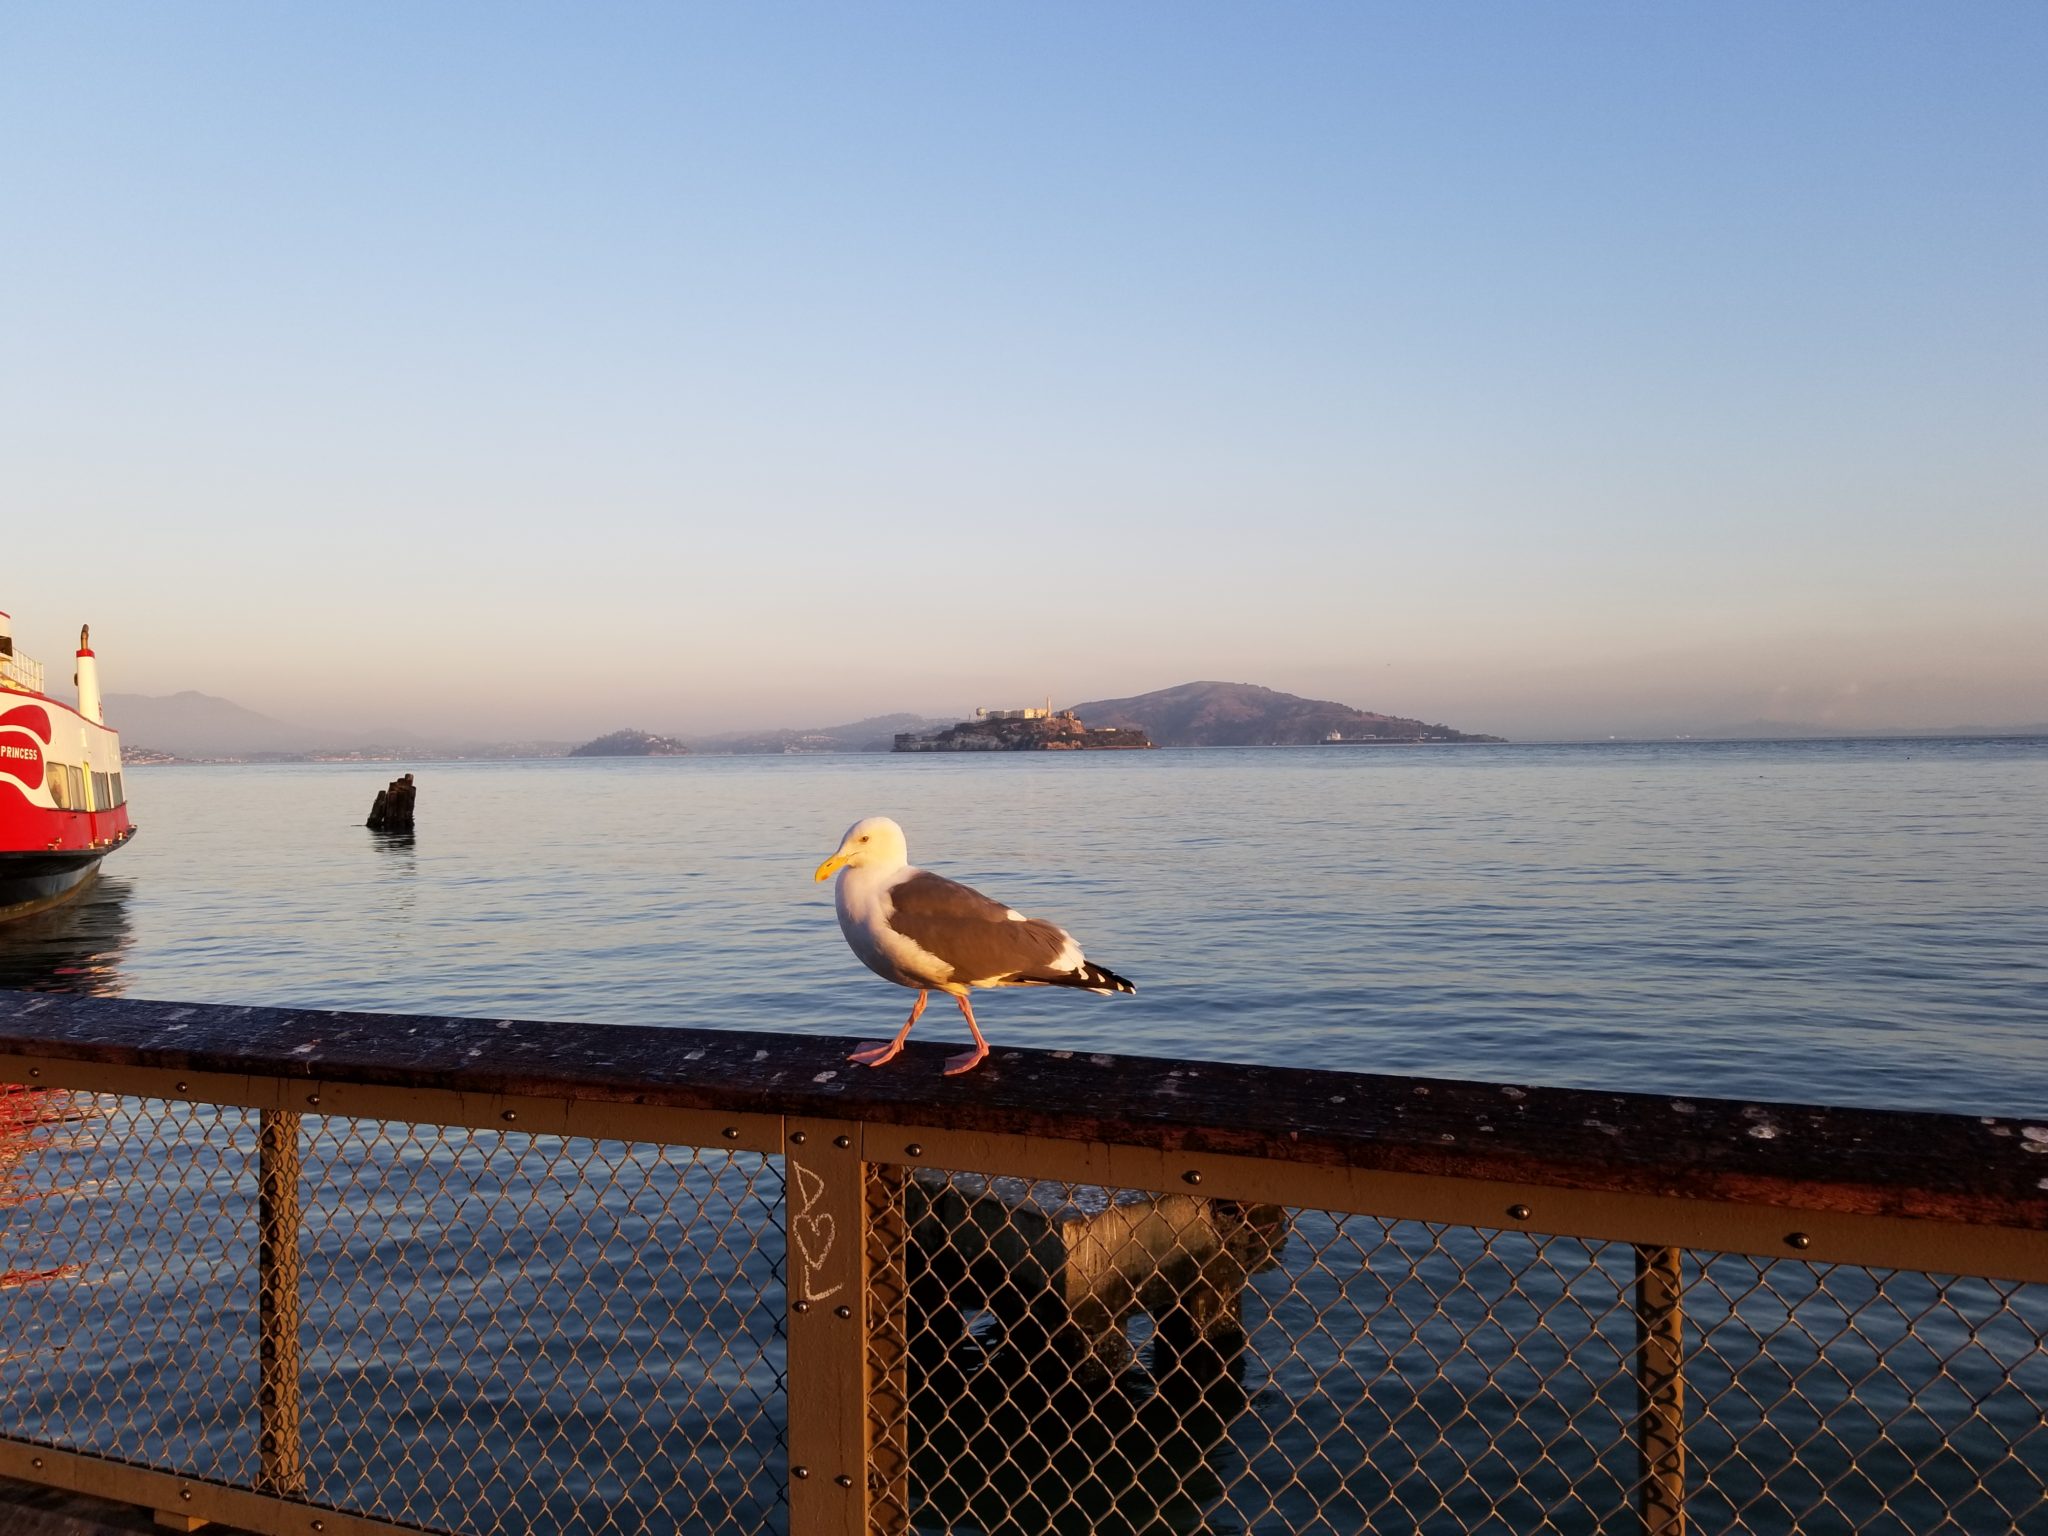 a bird standing on a fence near water